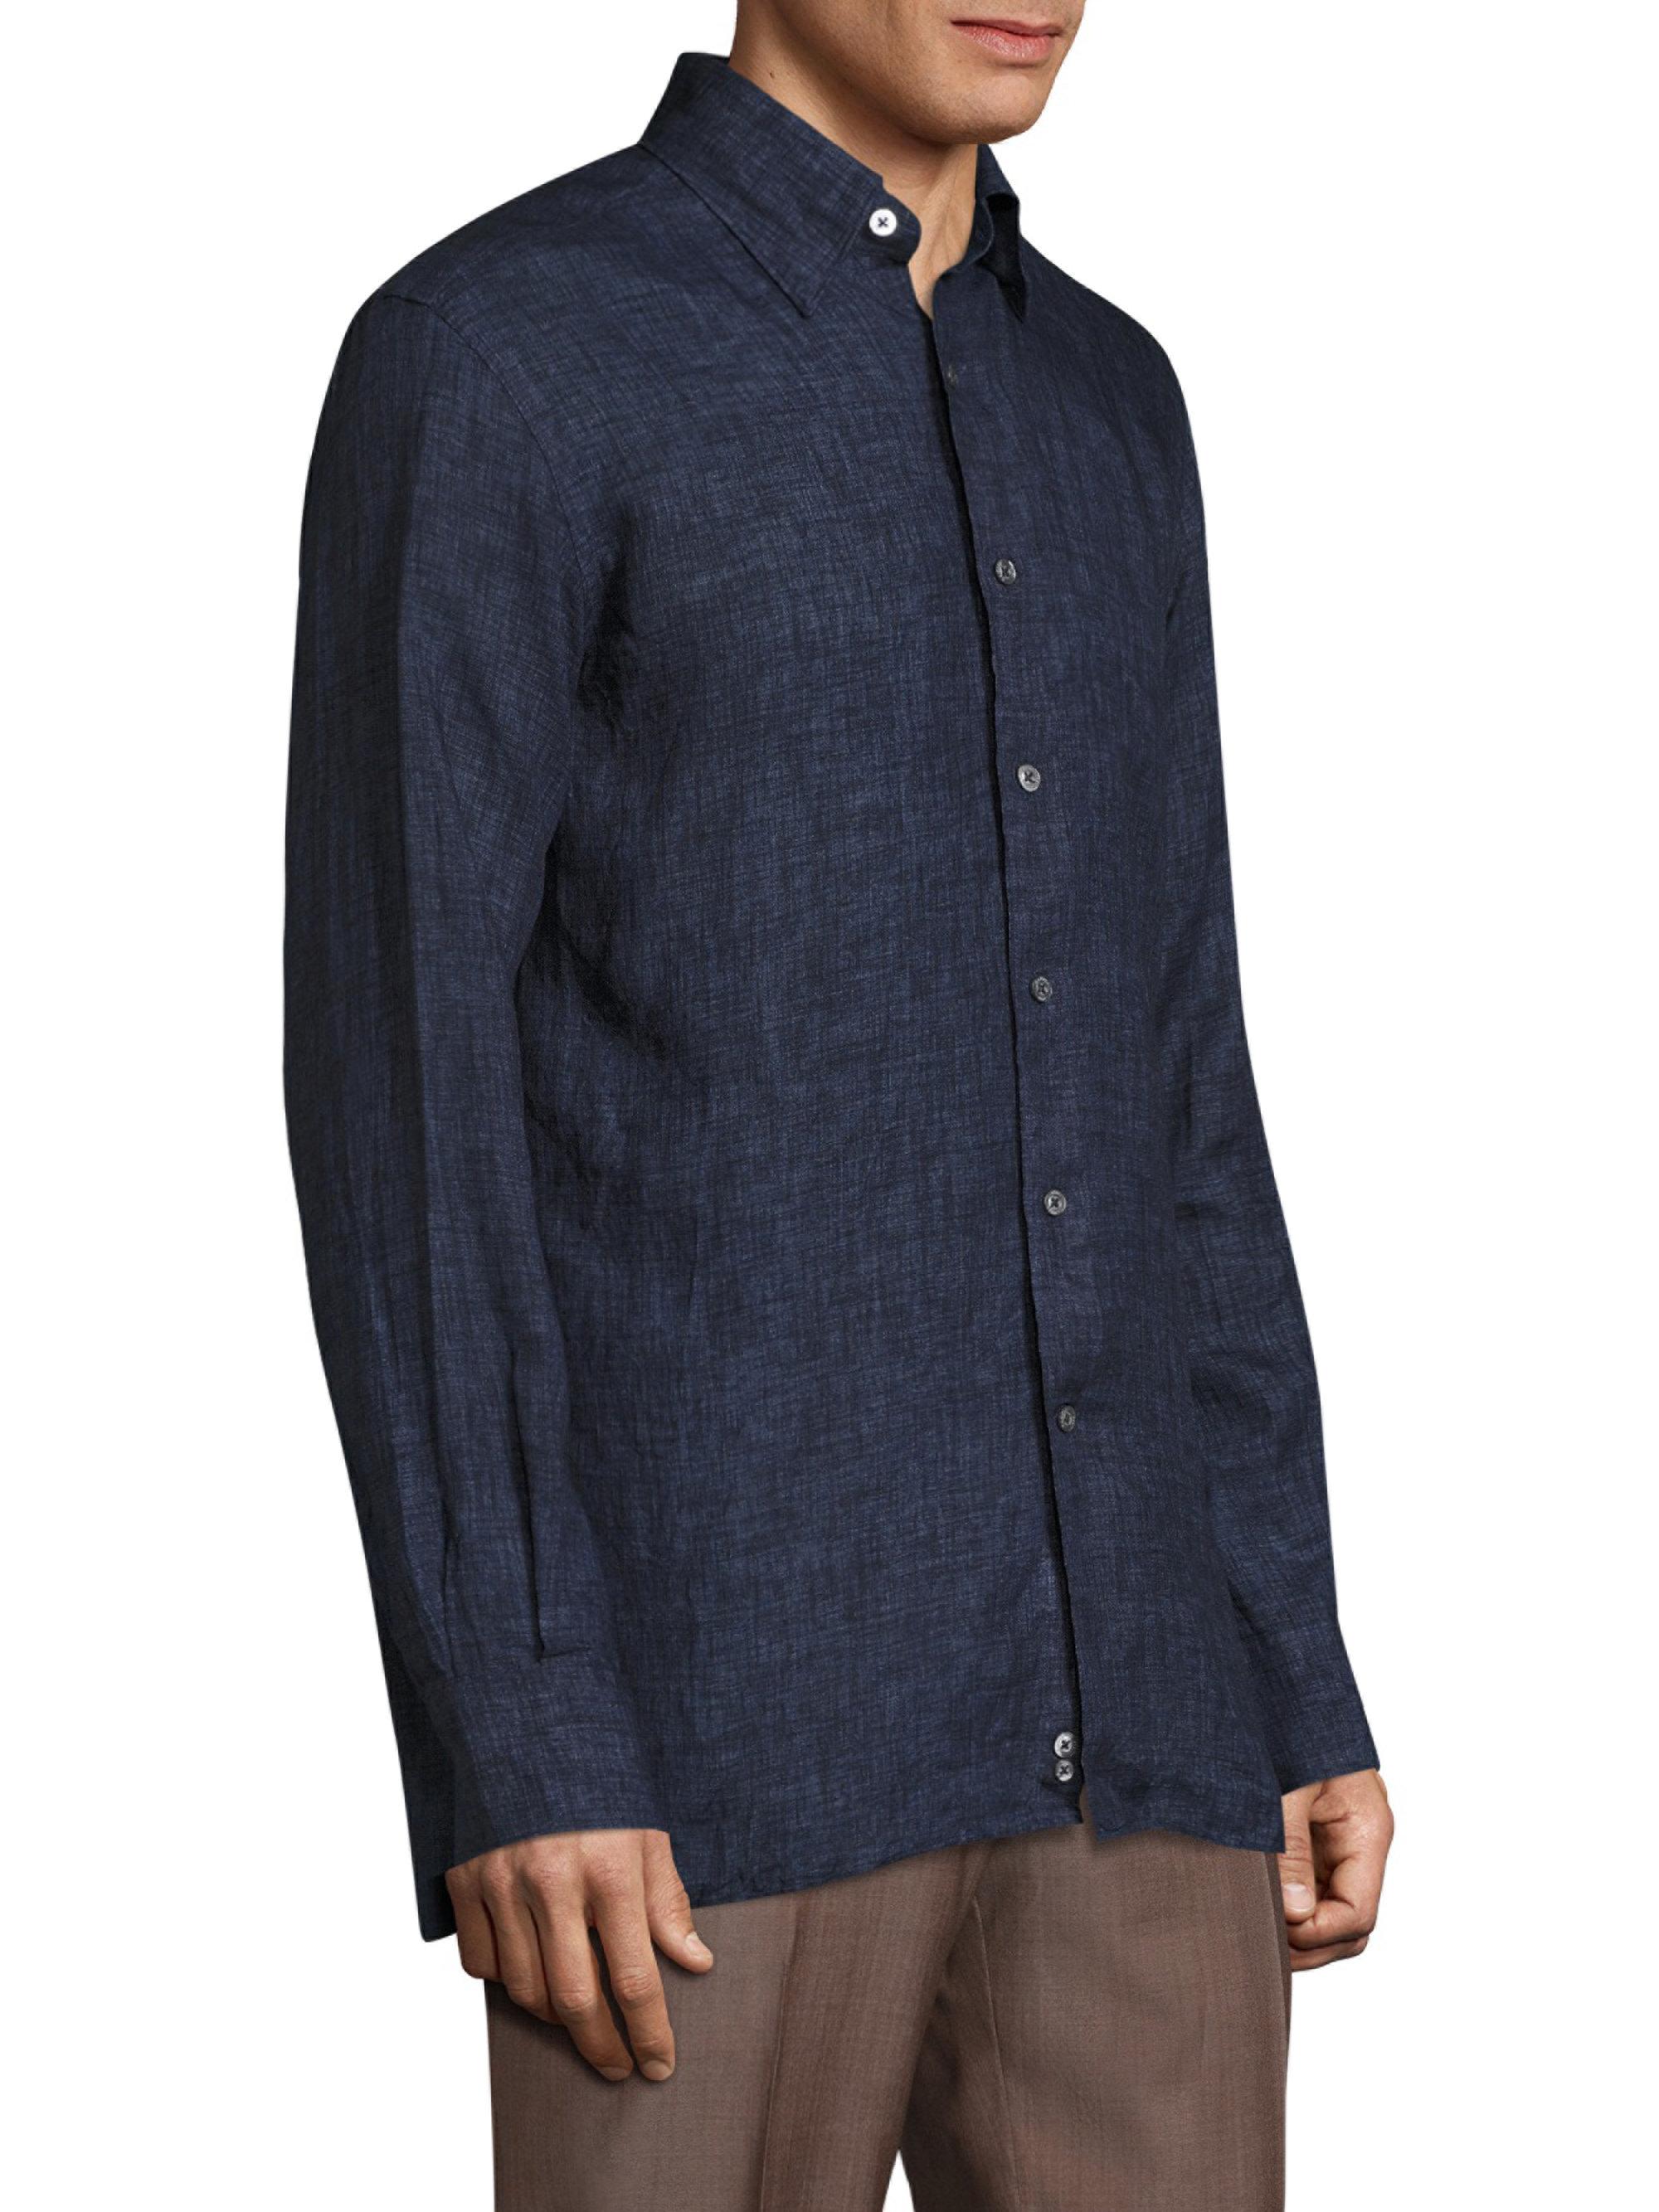 Lyst - Canali Regular-fit Solid Linen Shirt in Blue for Men